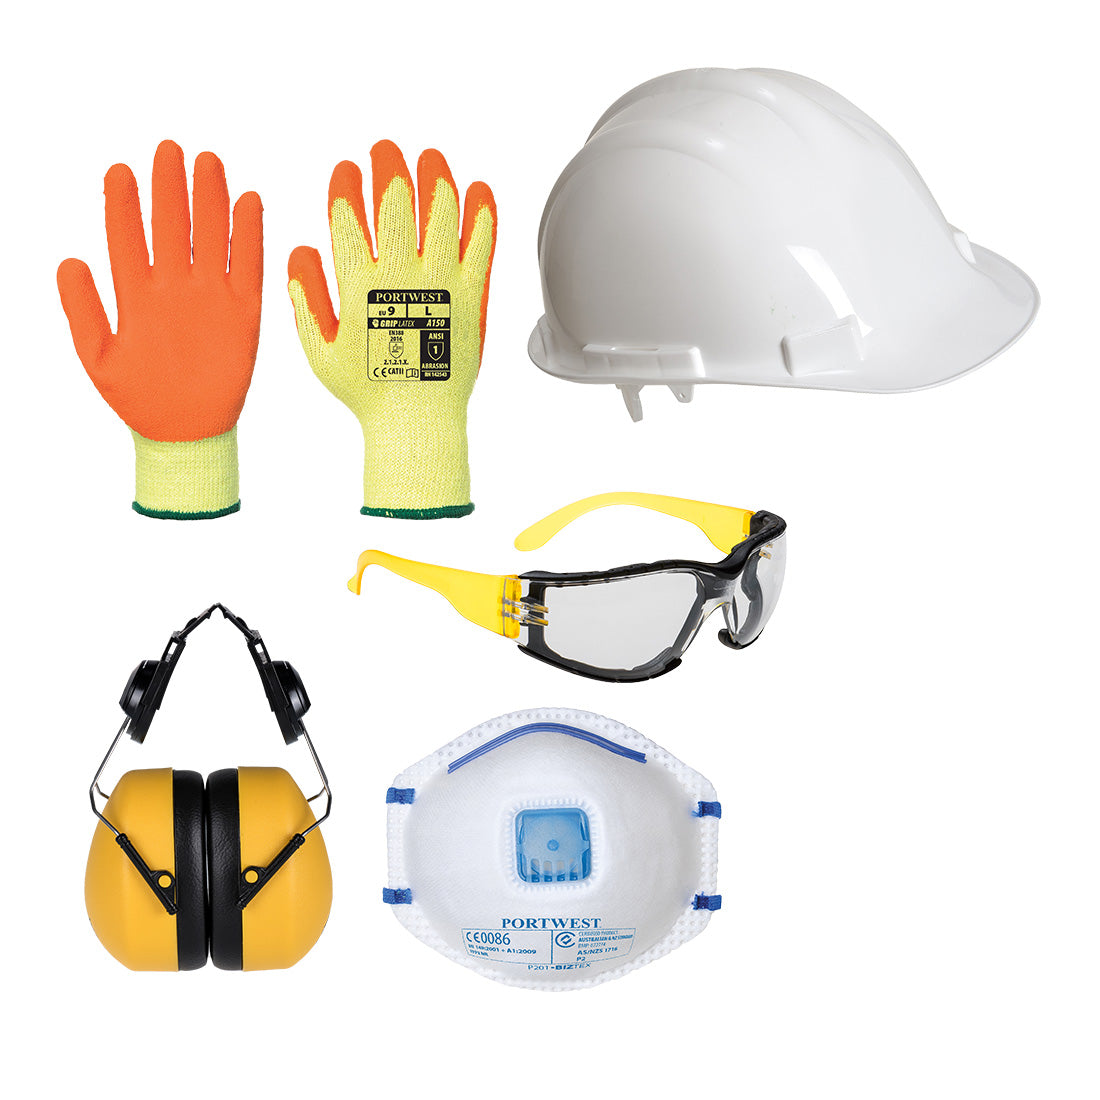 Portwest PPE Equipment